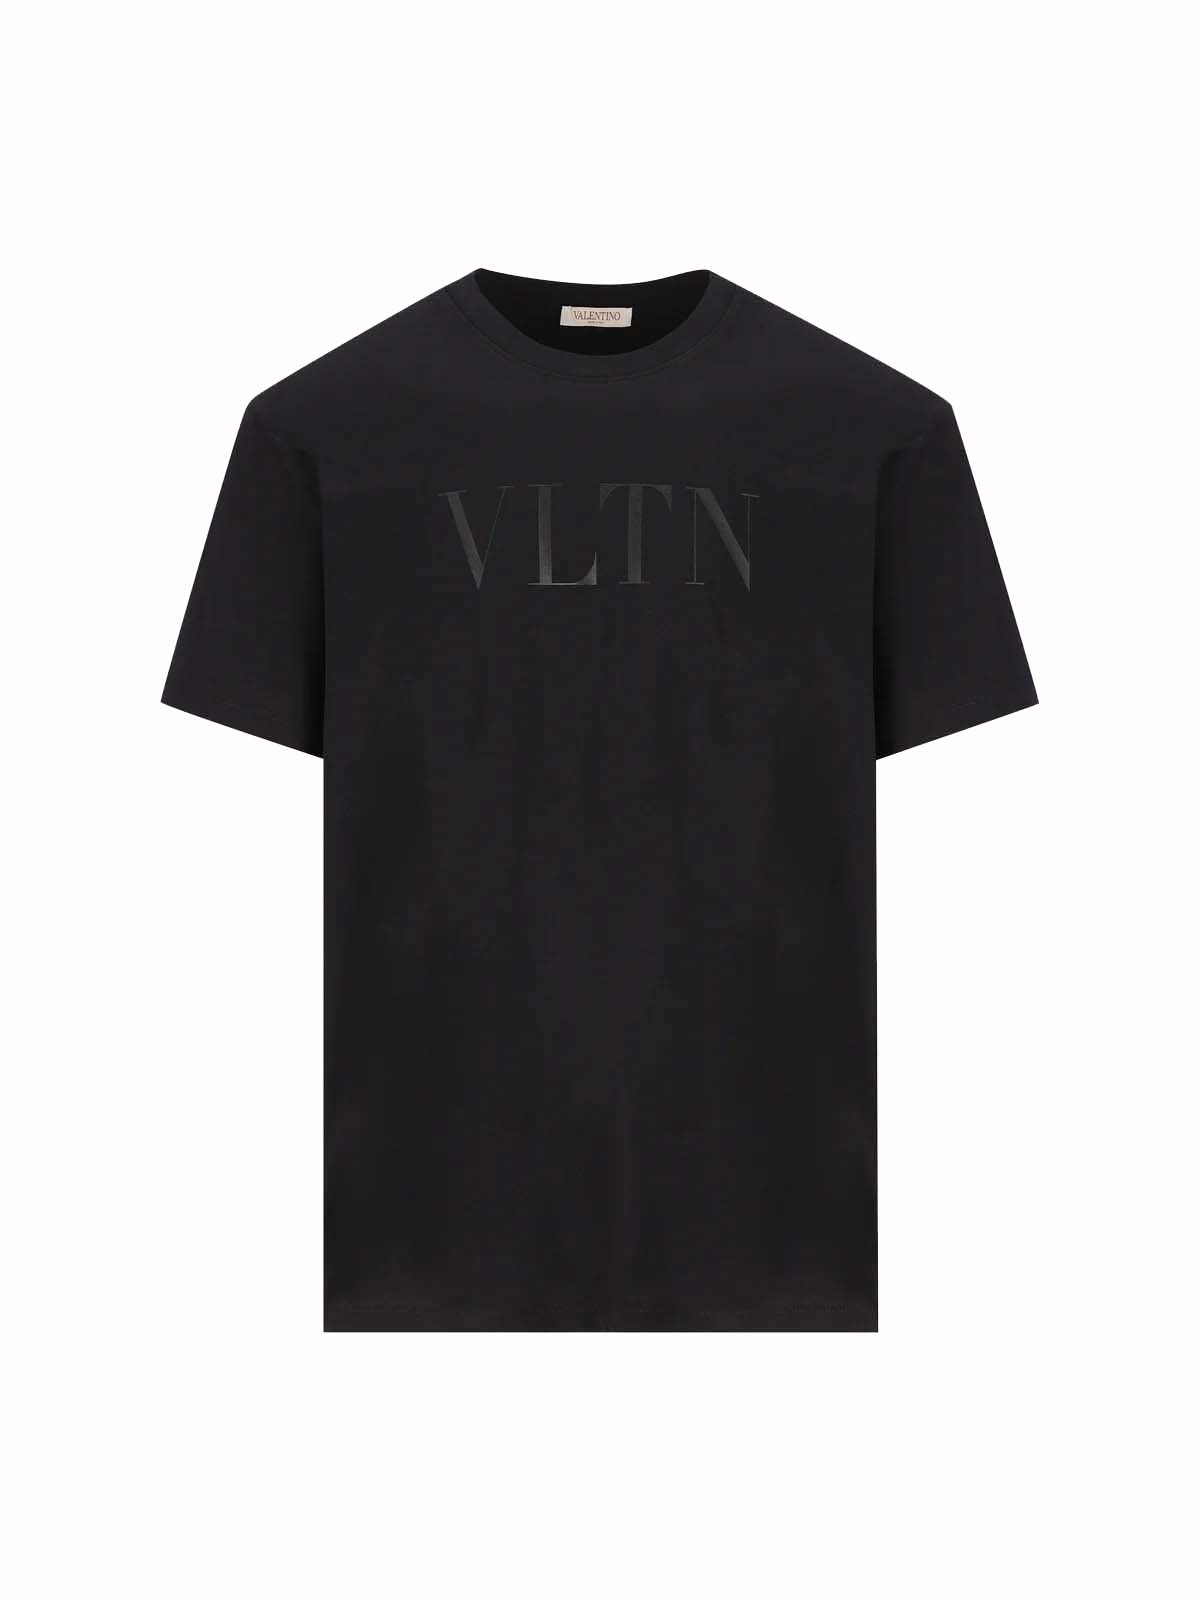 Valentino VLTN Logo T-Shirt Black メンズ - JP